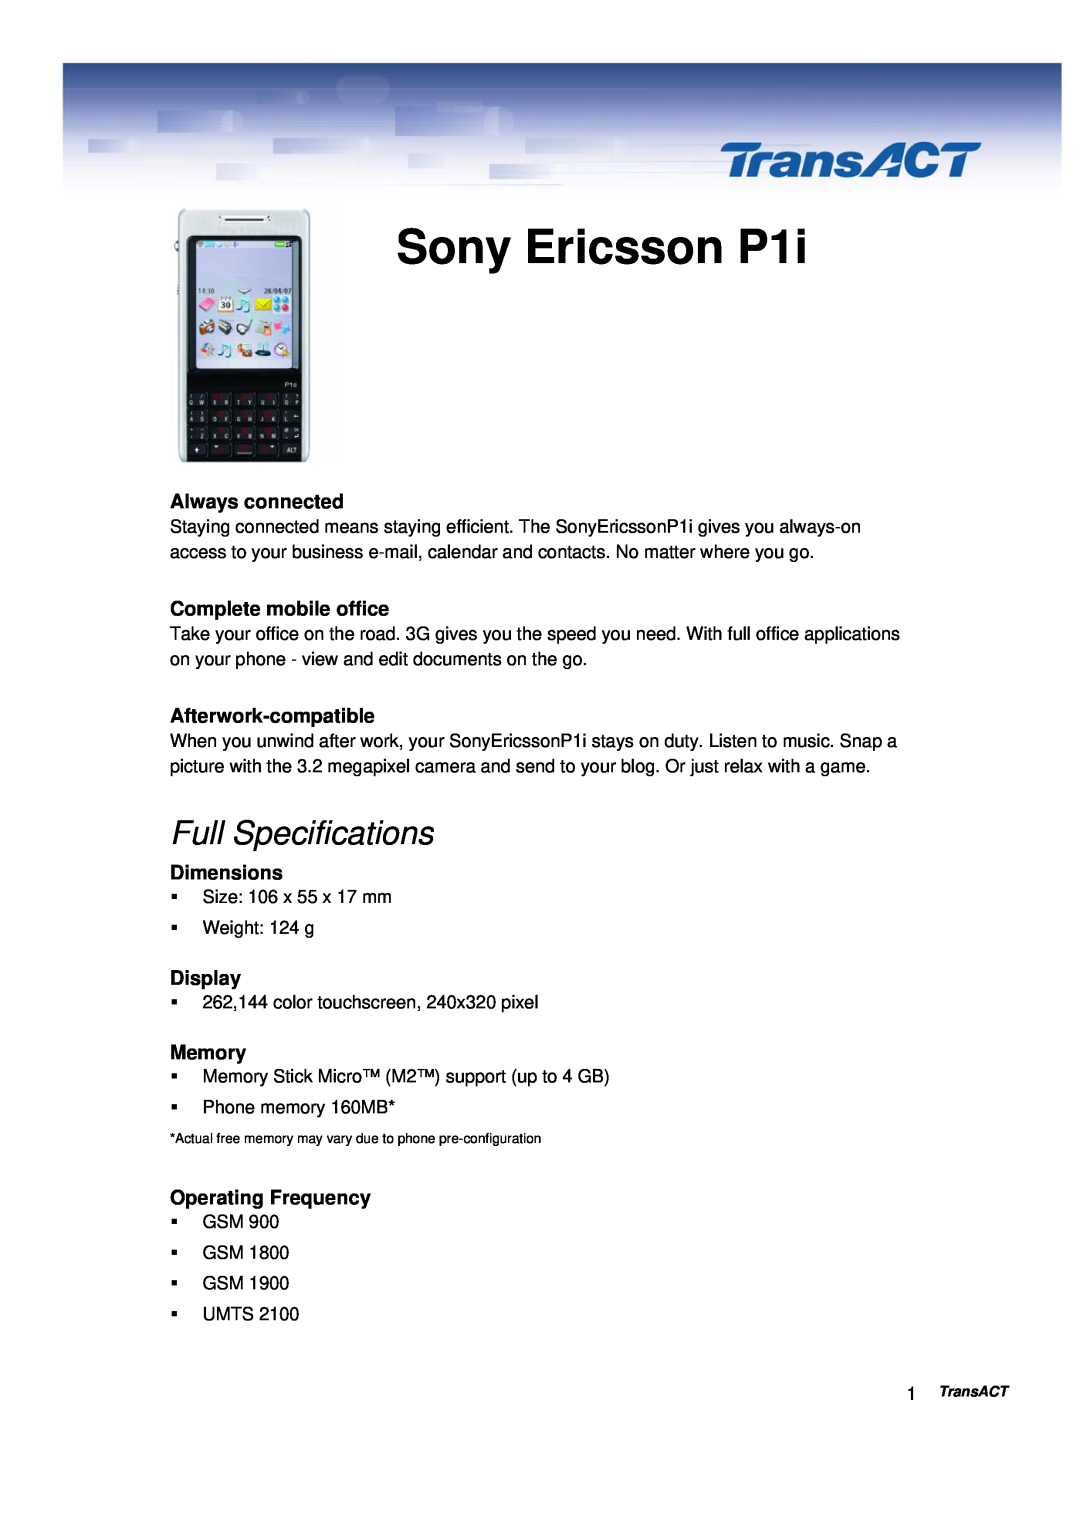 Sony Ericsson specifications Sony Ericsson P1i, Full Specifications 